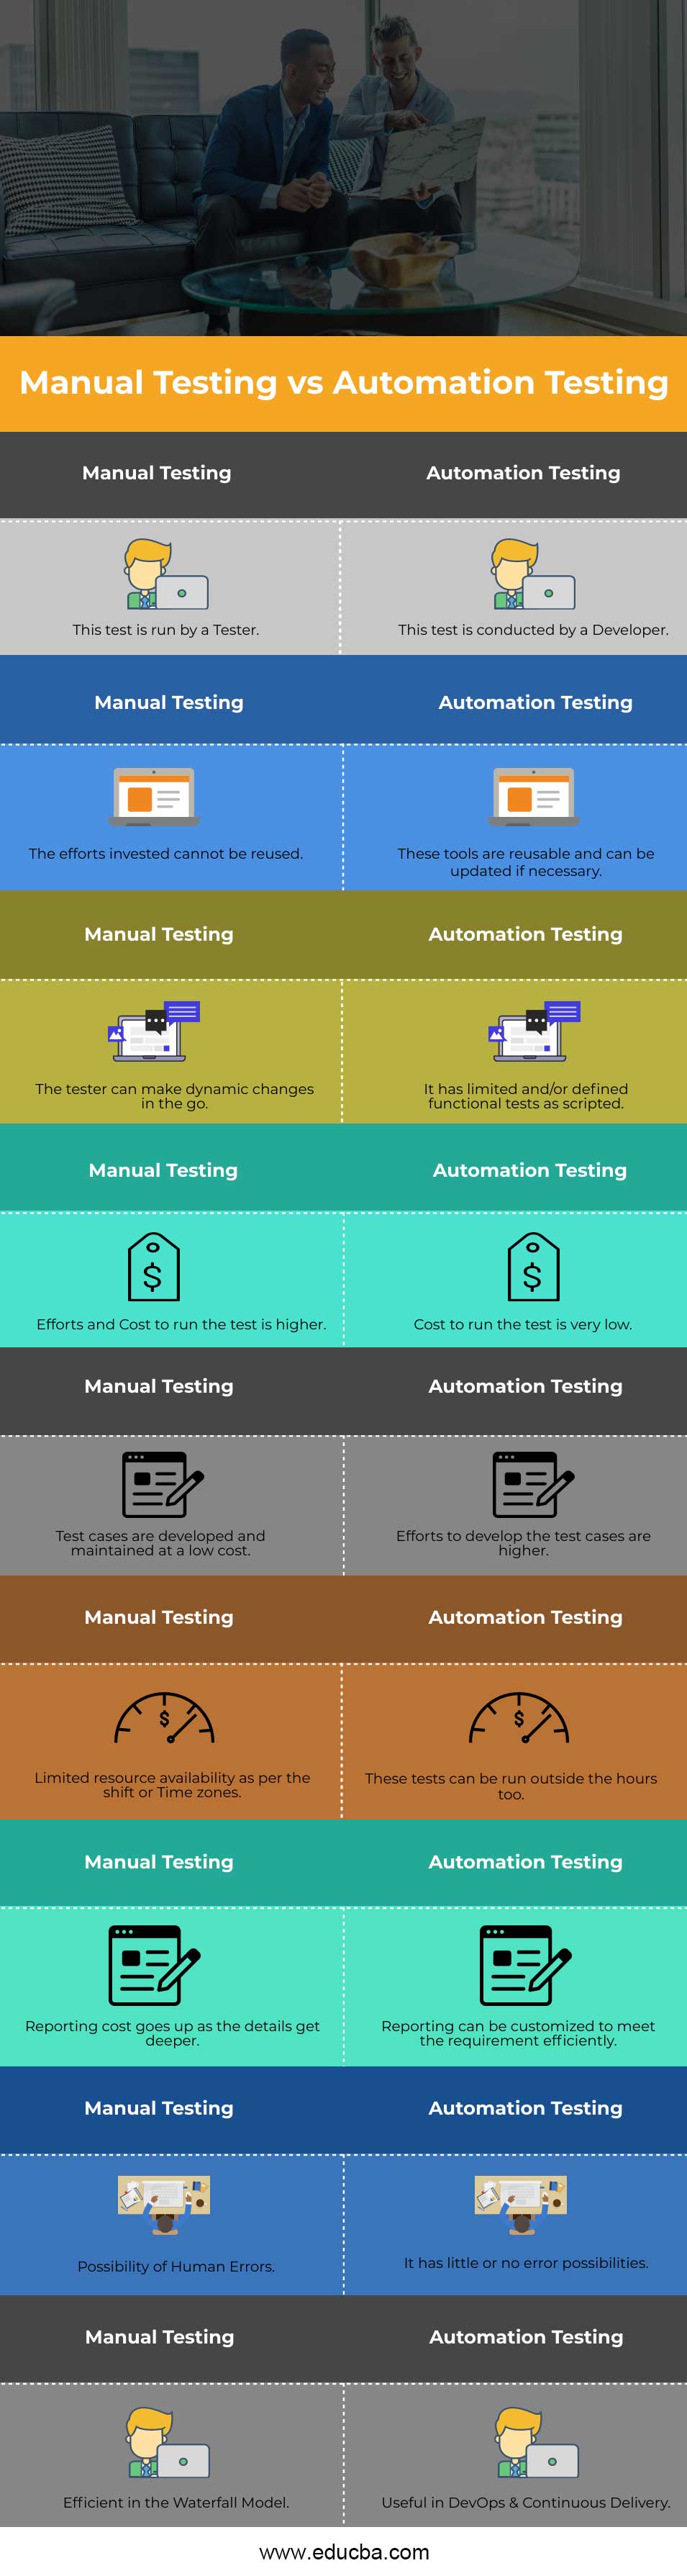 Manual Testing vs Automation Testing Info